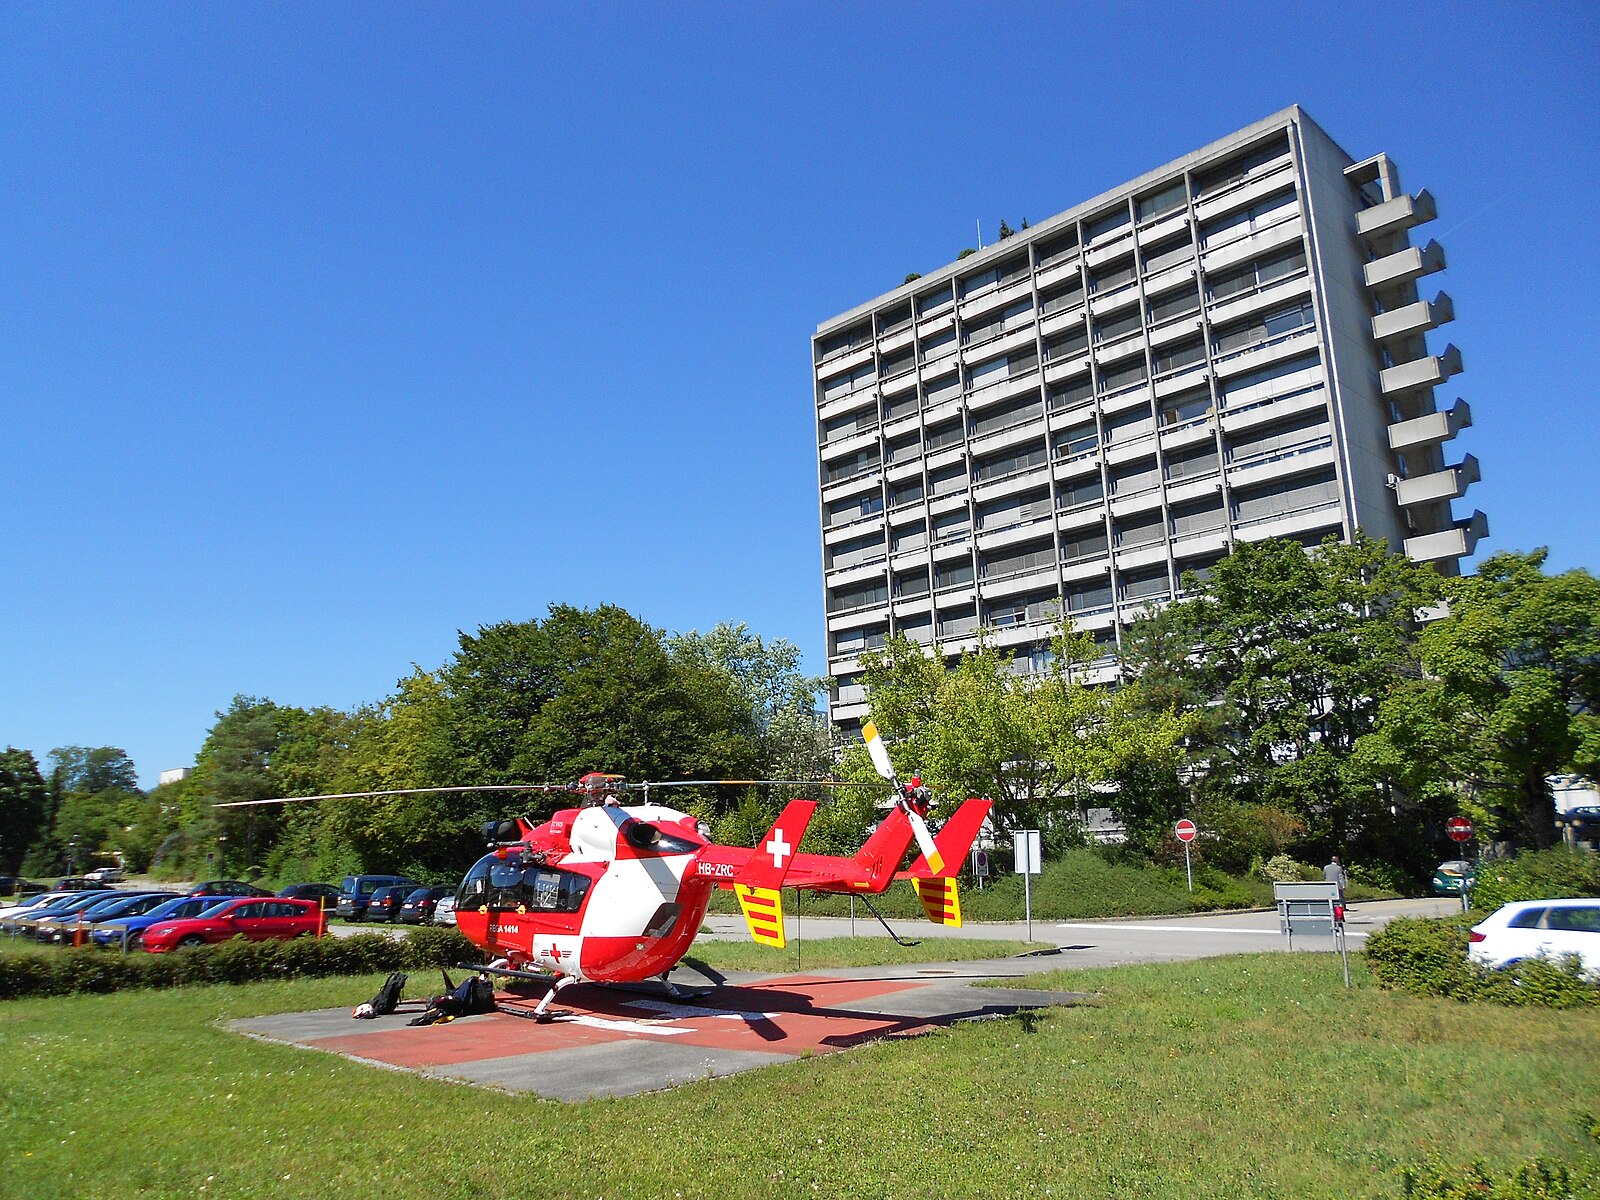 Rega Helikopter vor dem Spital Solothurn. Bild:Ch-info.ch, CC BY 3.0, via Wikimedia Commons.